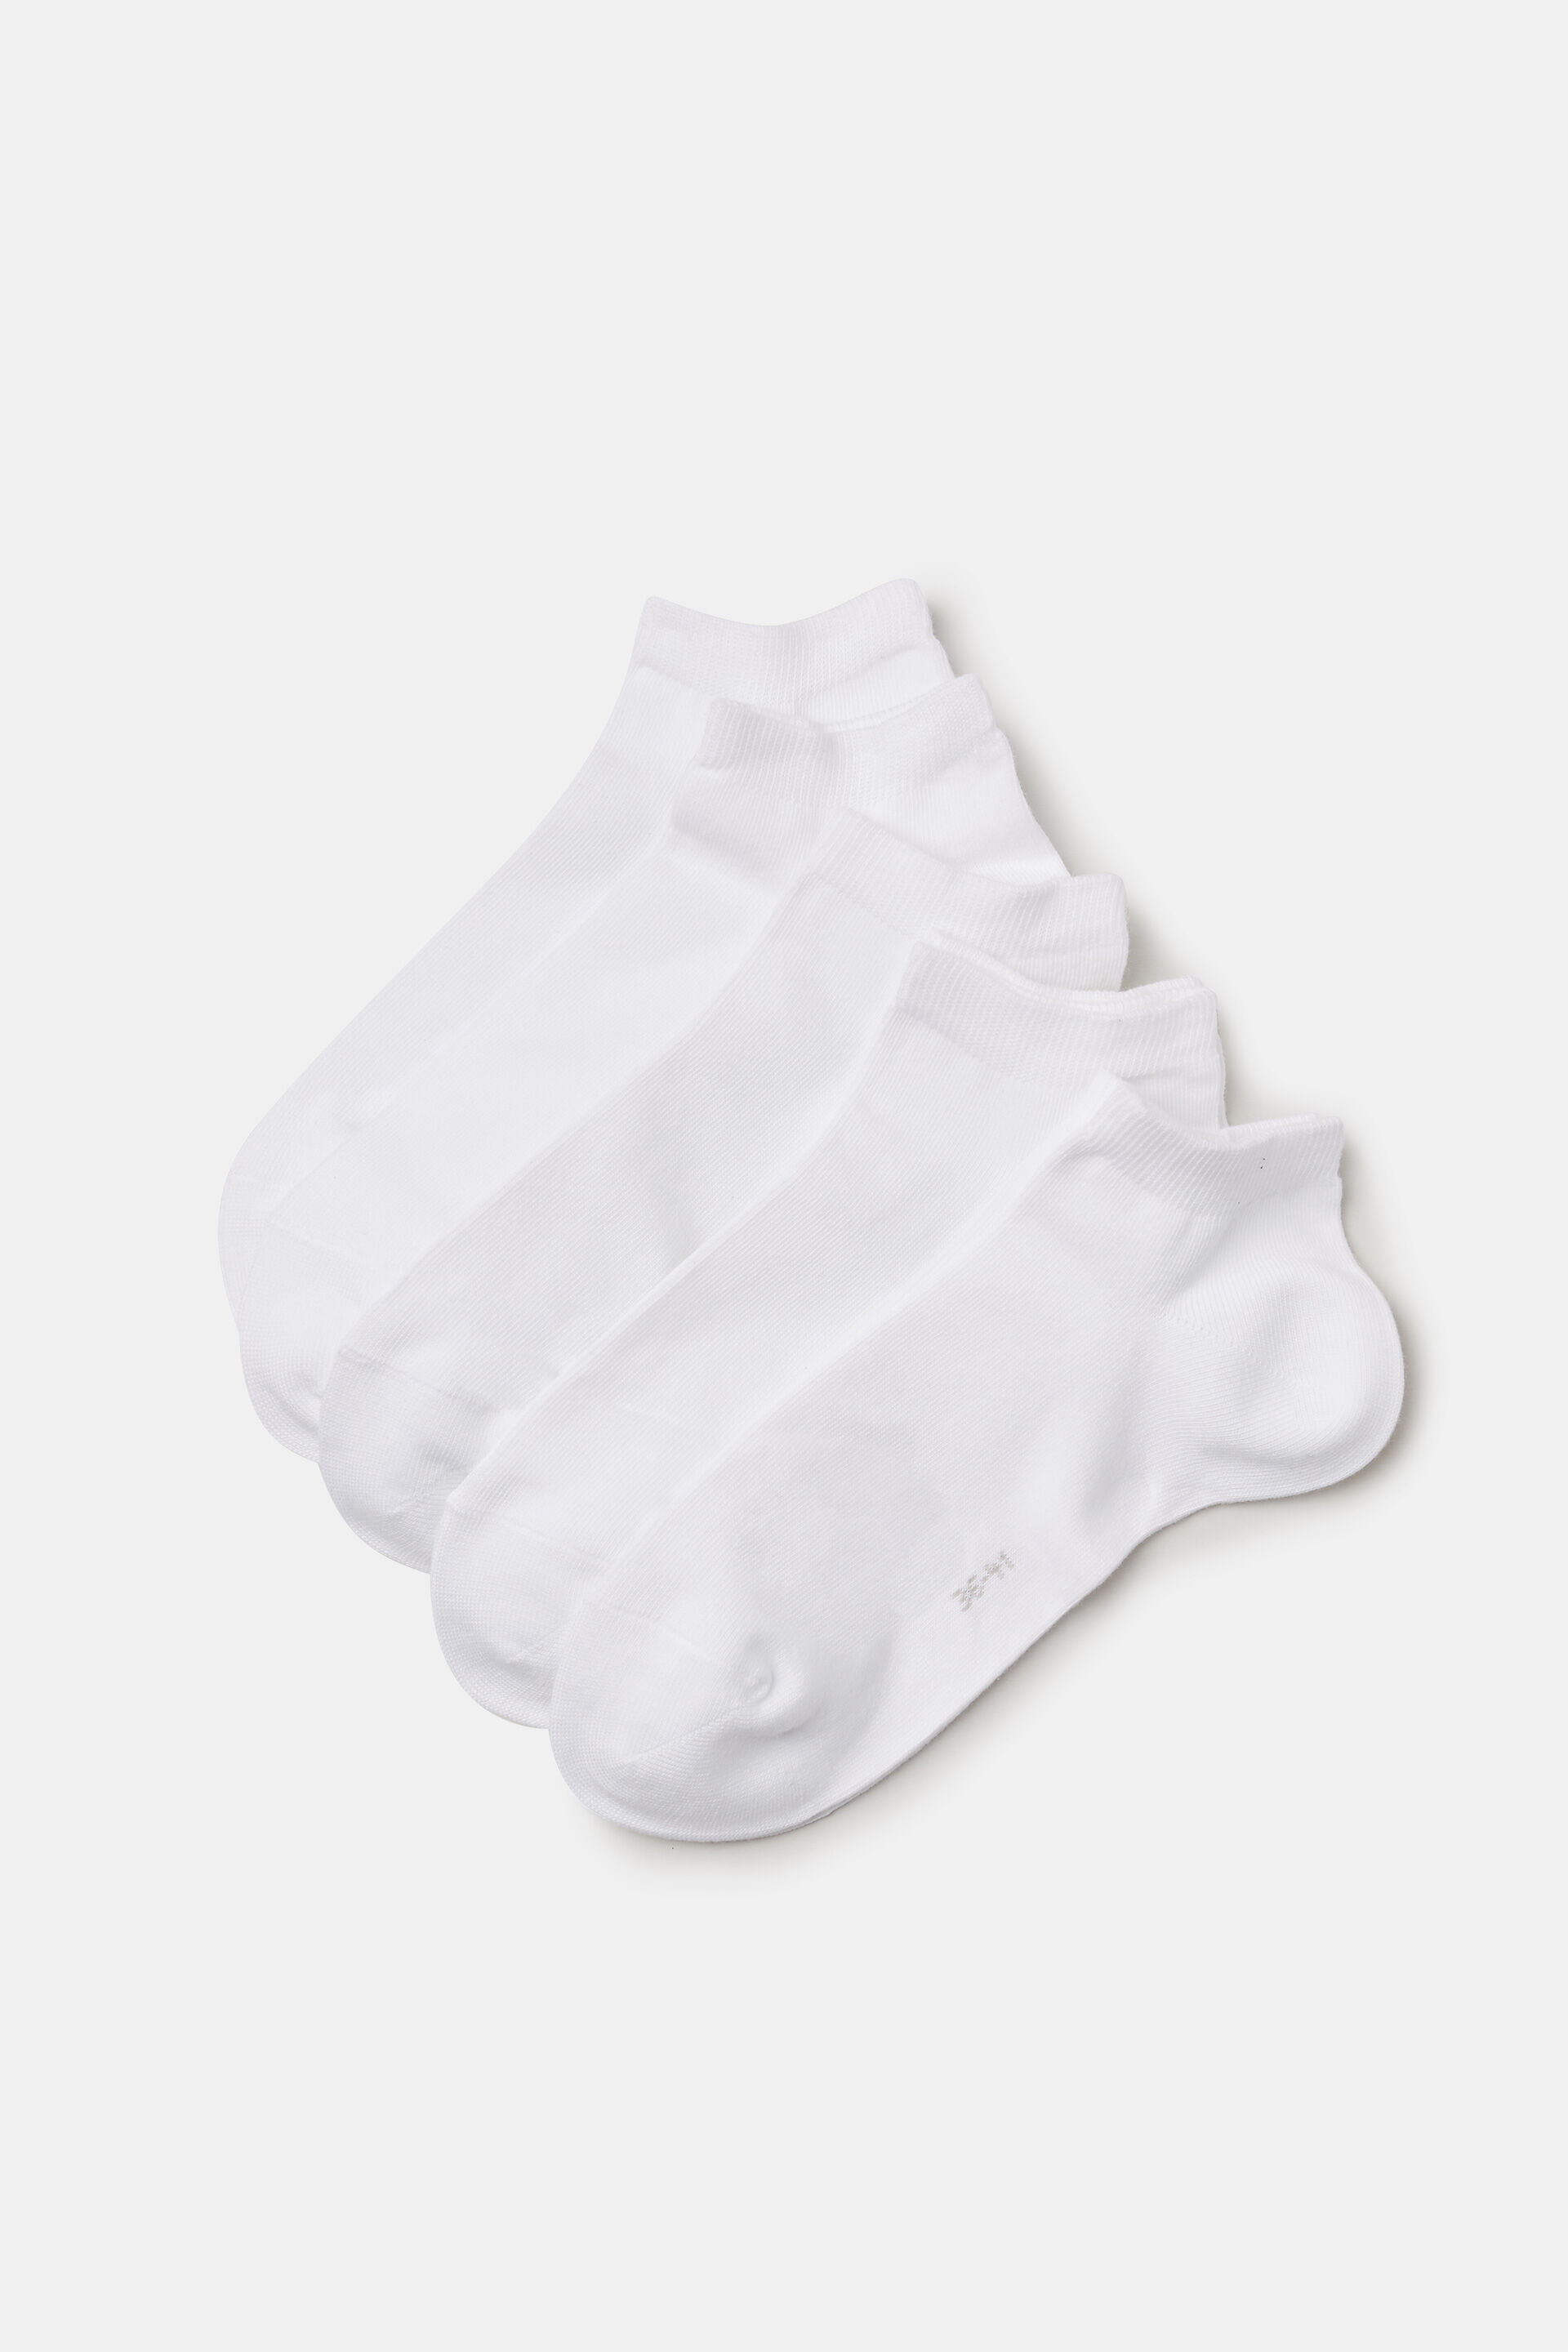 Esprit cotton socks 5-pair blended of pack